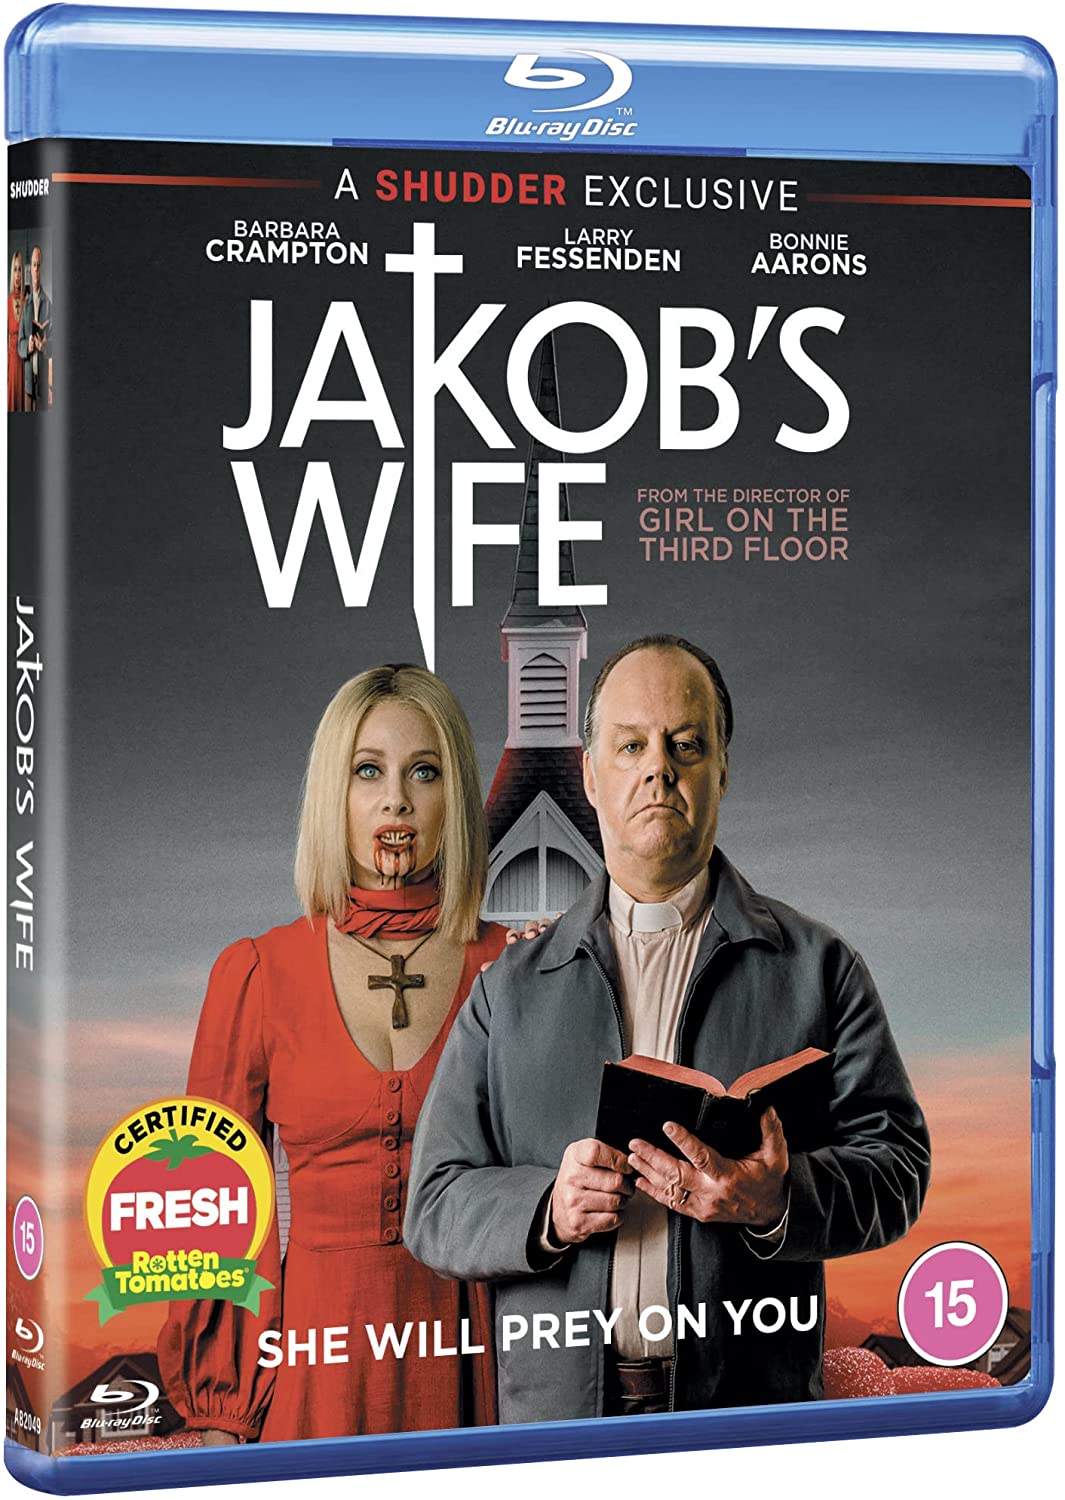 Jakob's Wife (SHUDDER) [2021] - Horror/Thriller [Blu-ray]